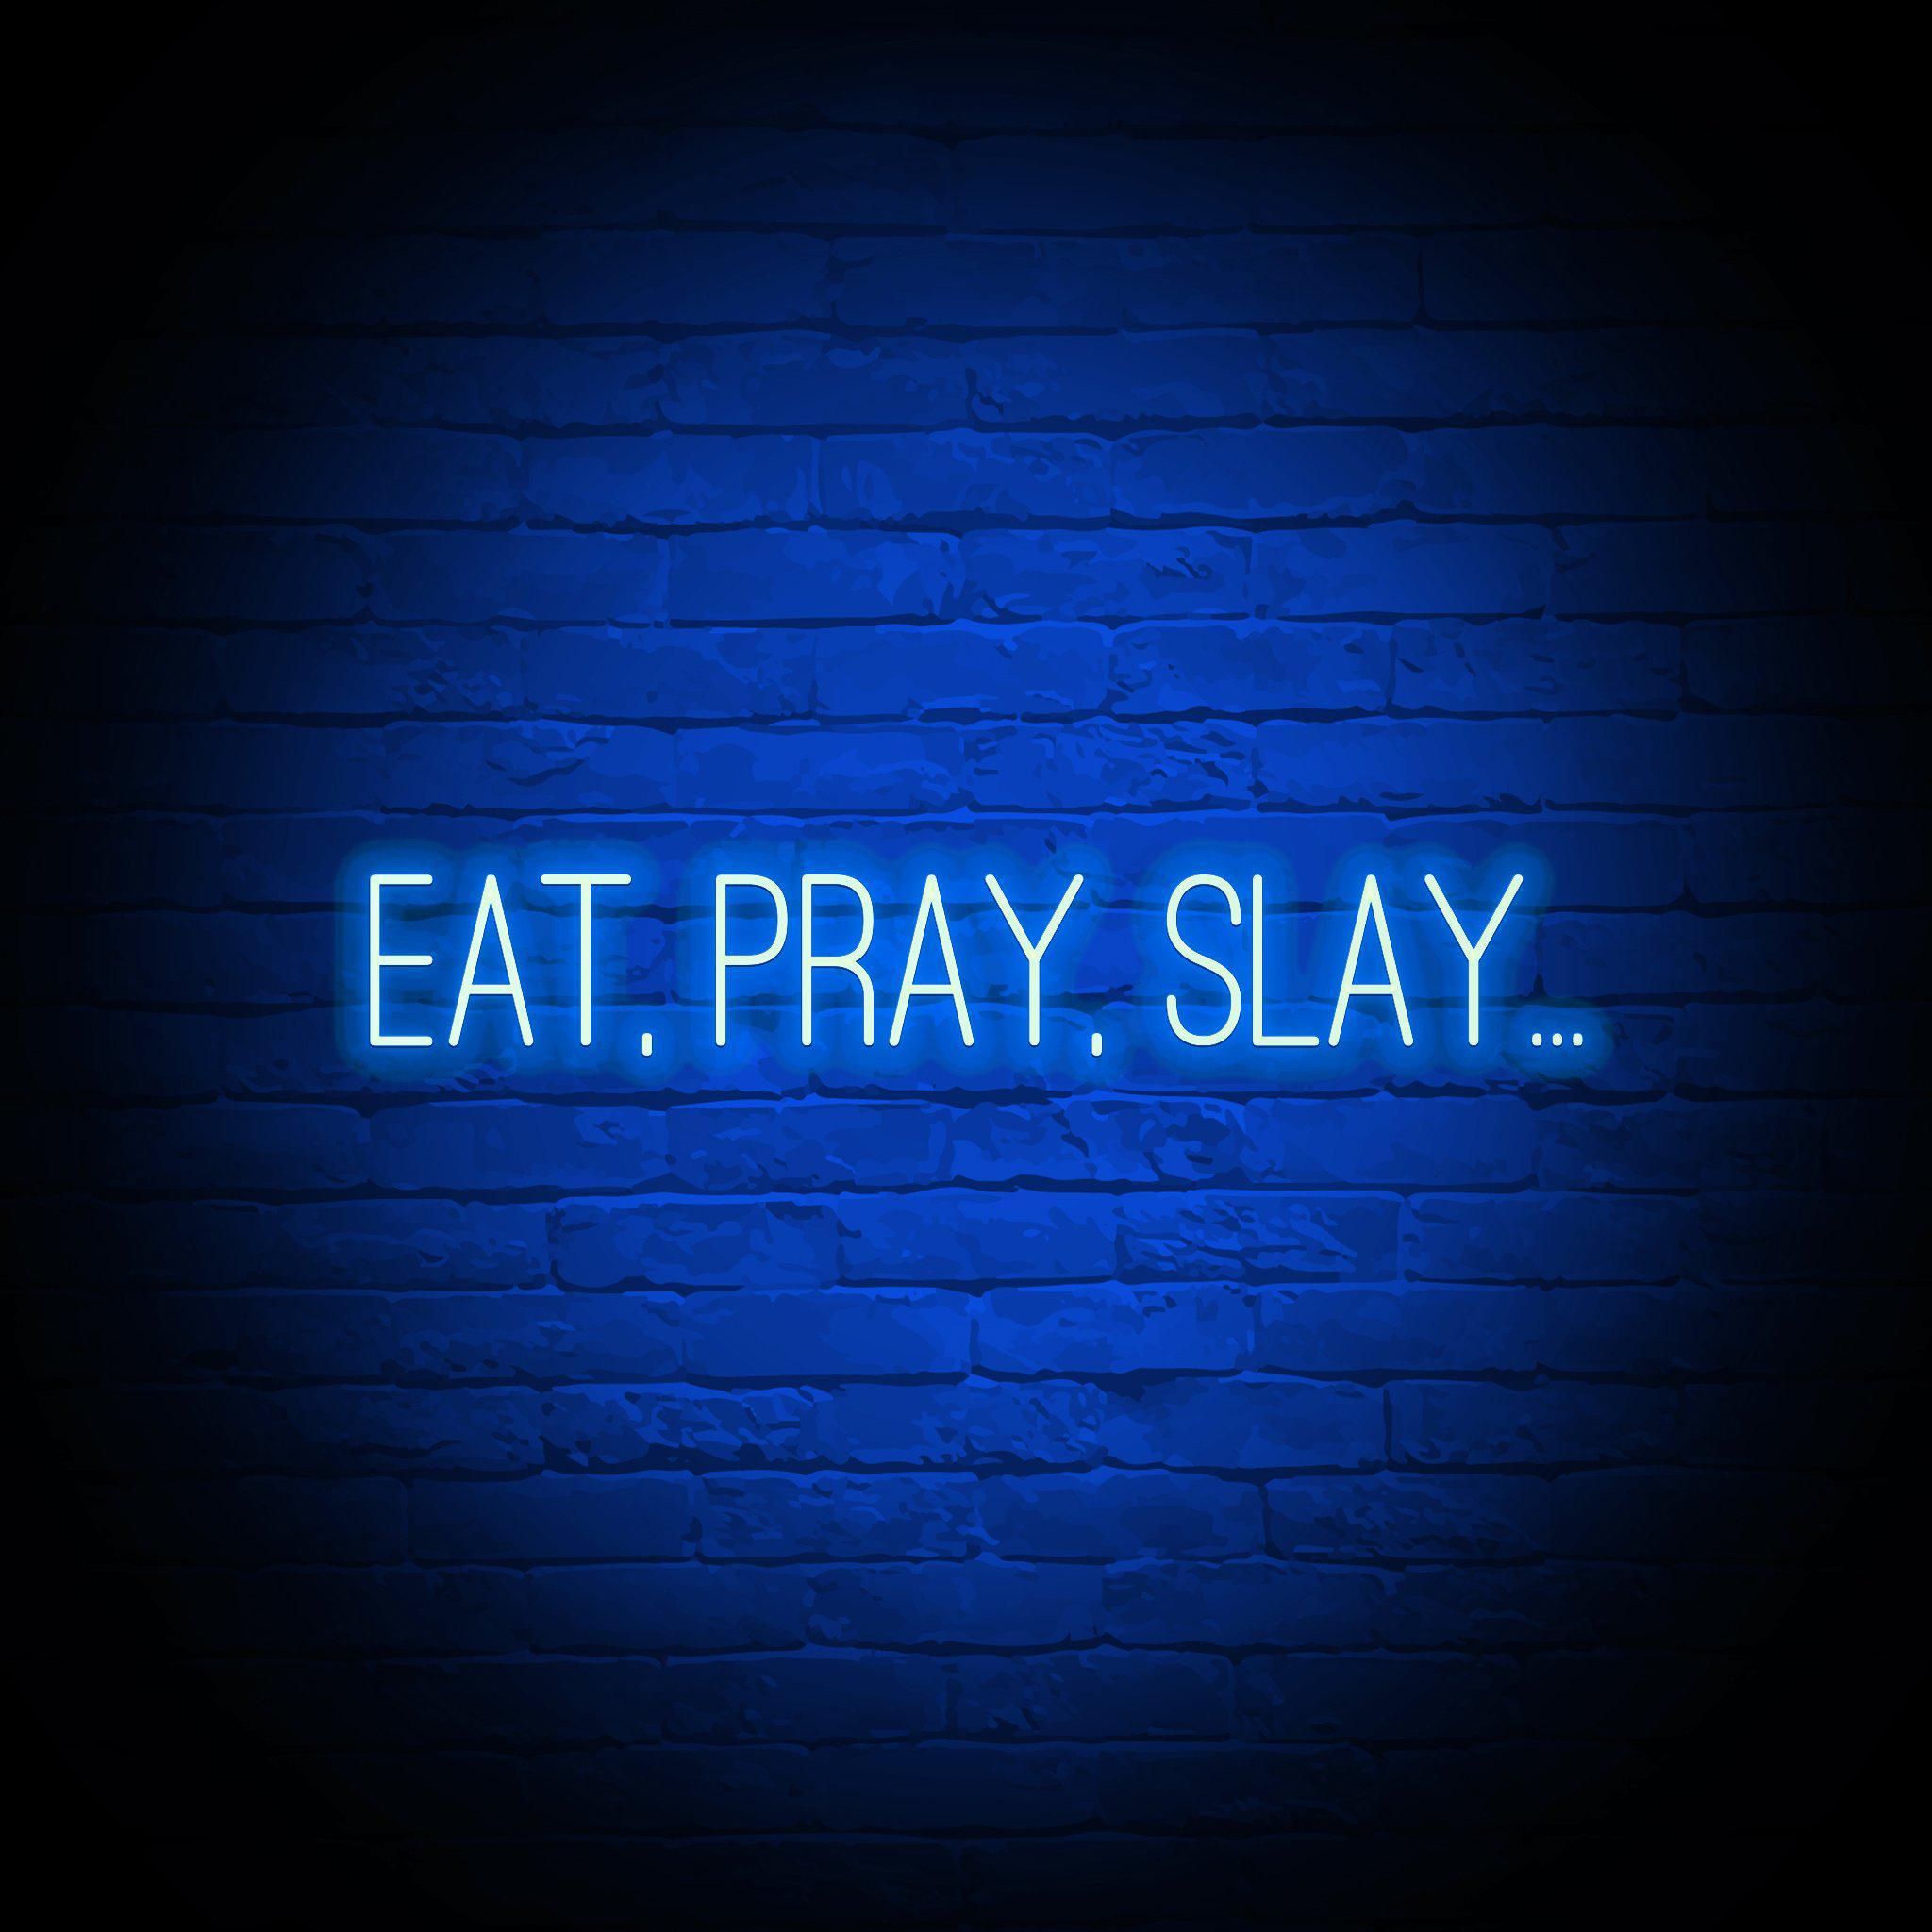 'EAT PRAY SLAY' NEON SIGN